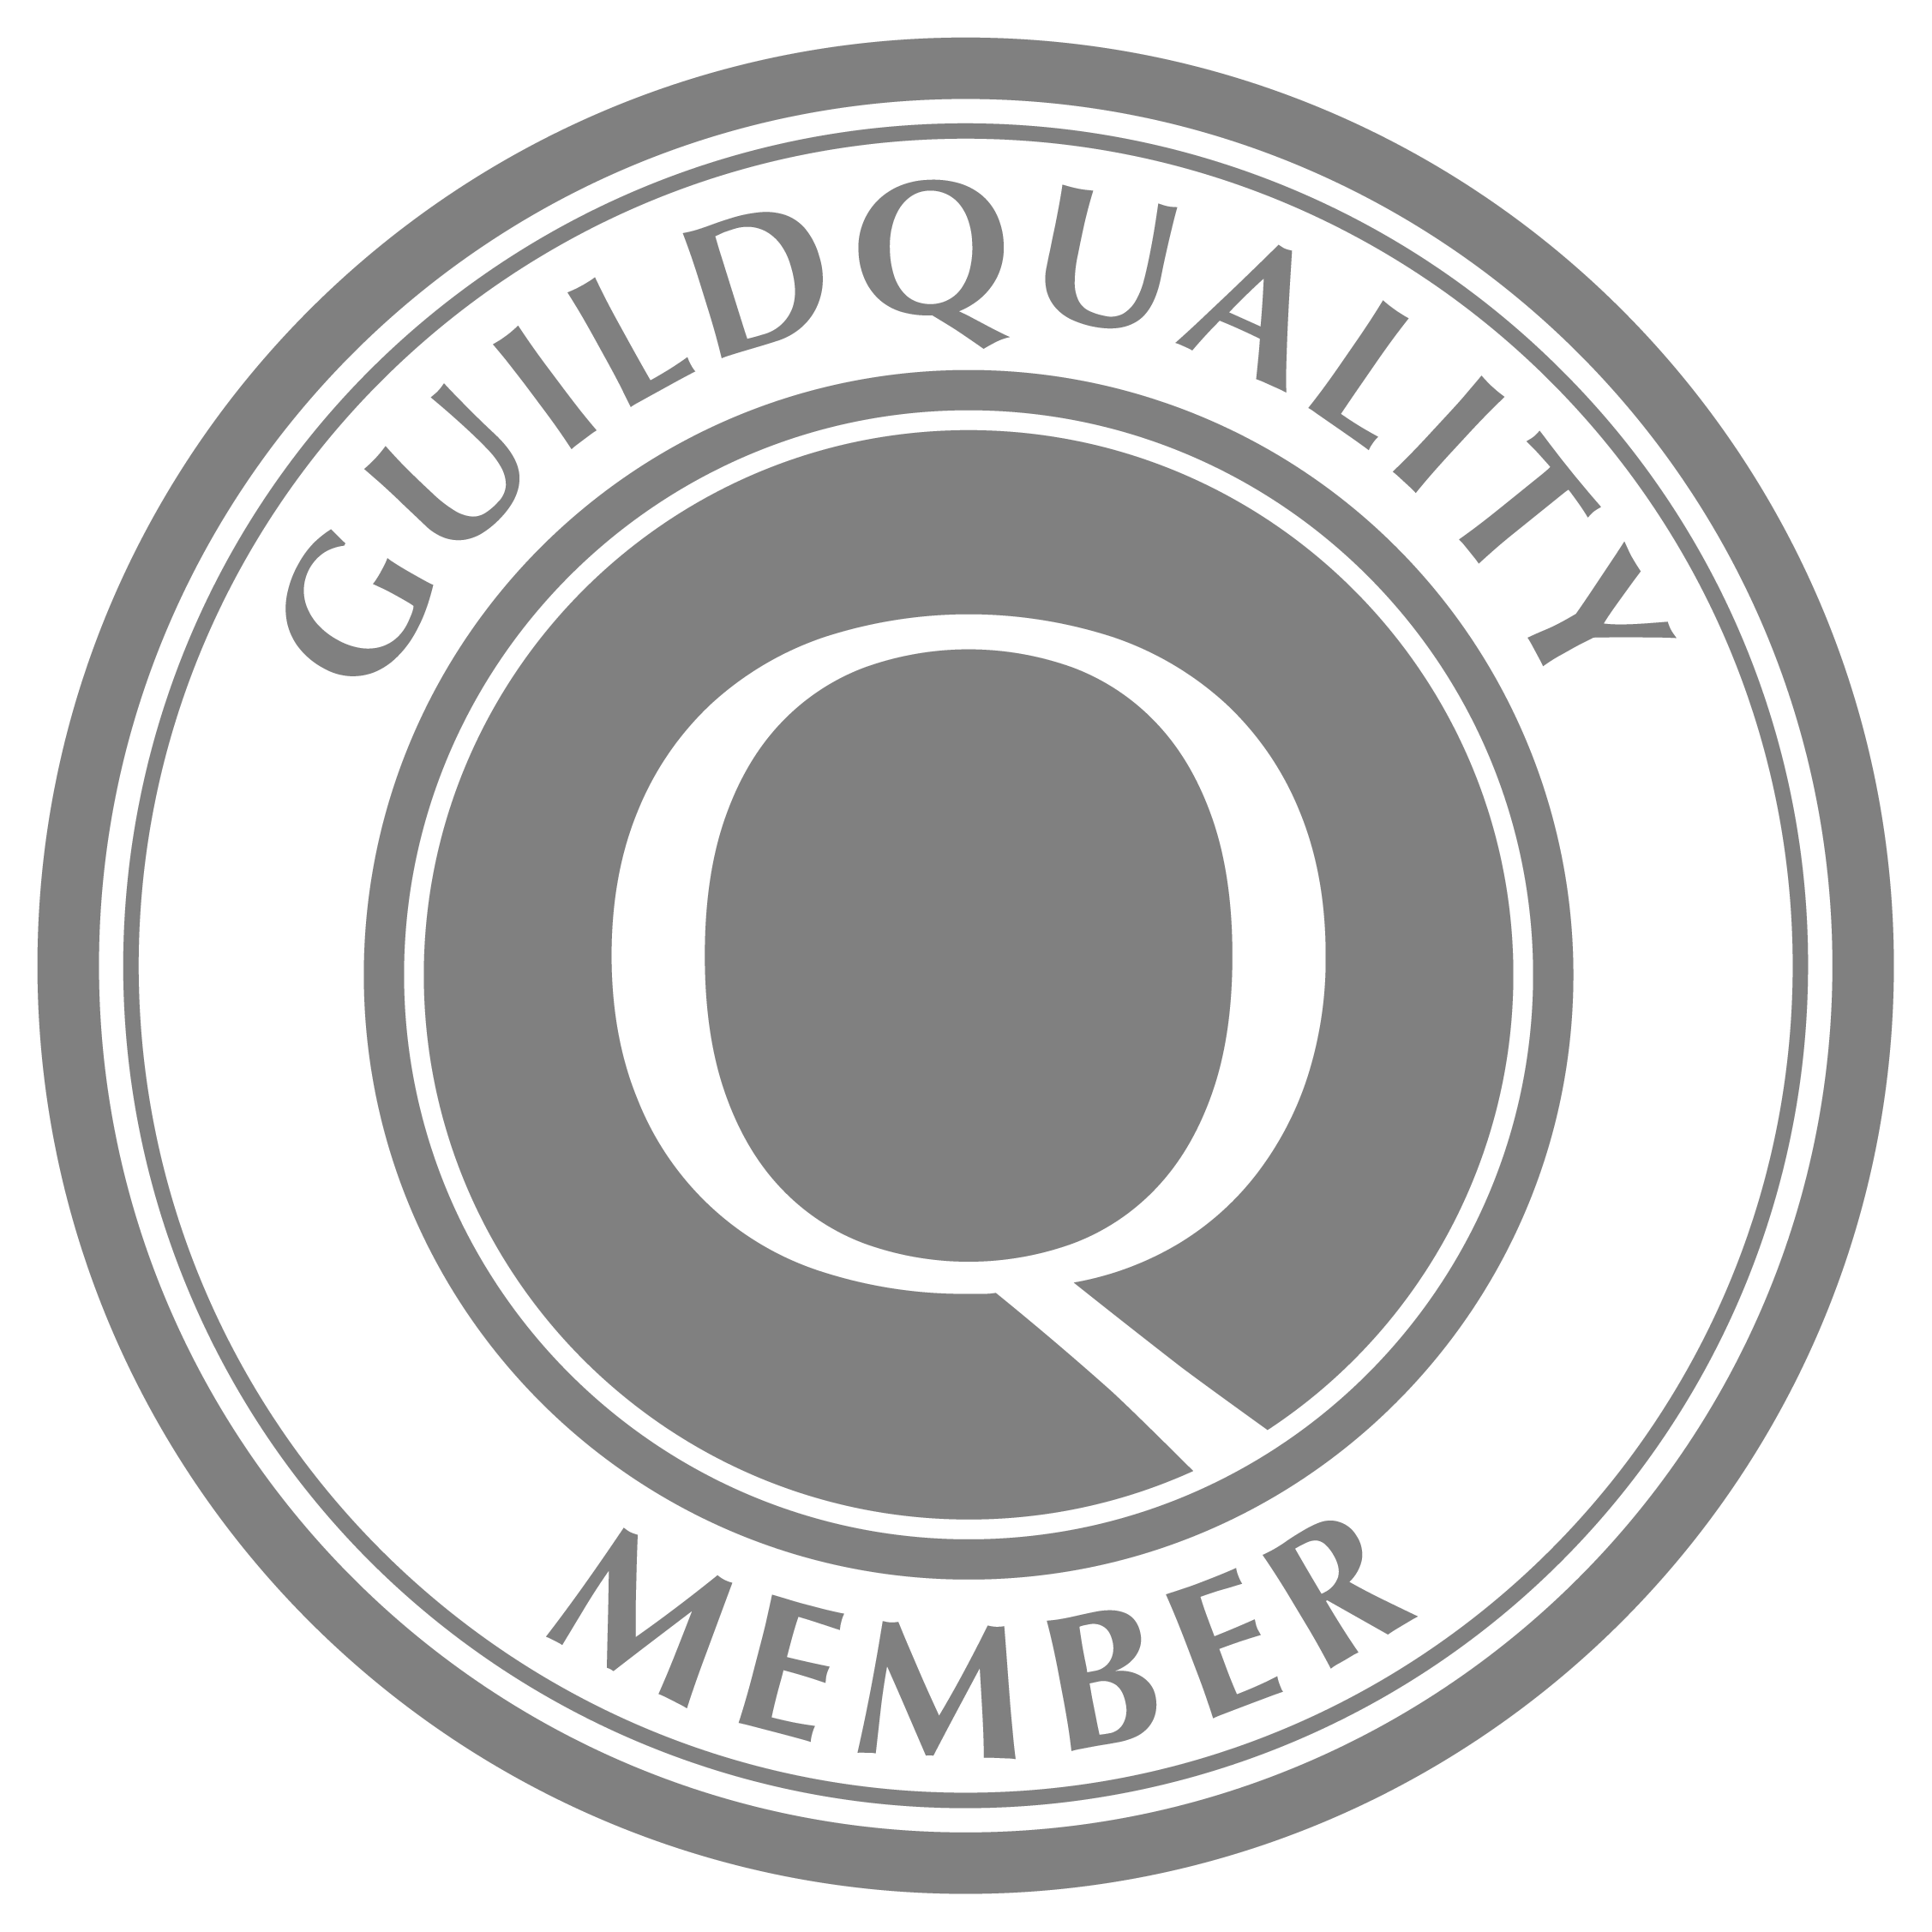 Guild Quality member_Gray